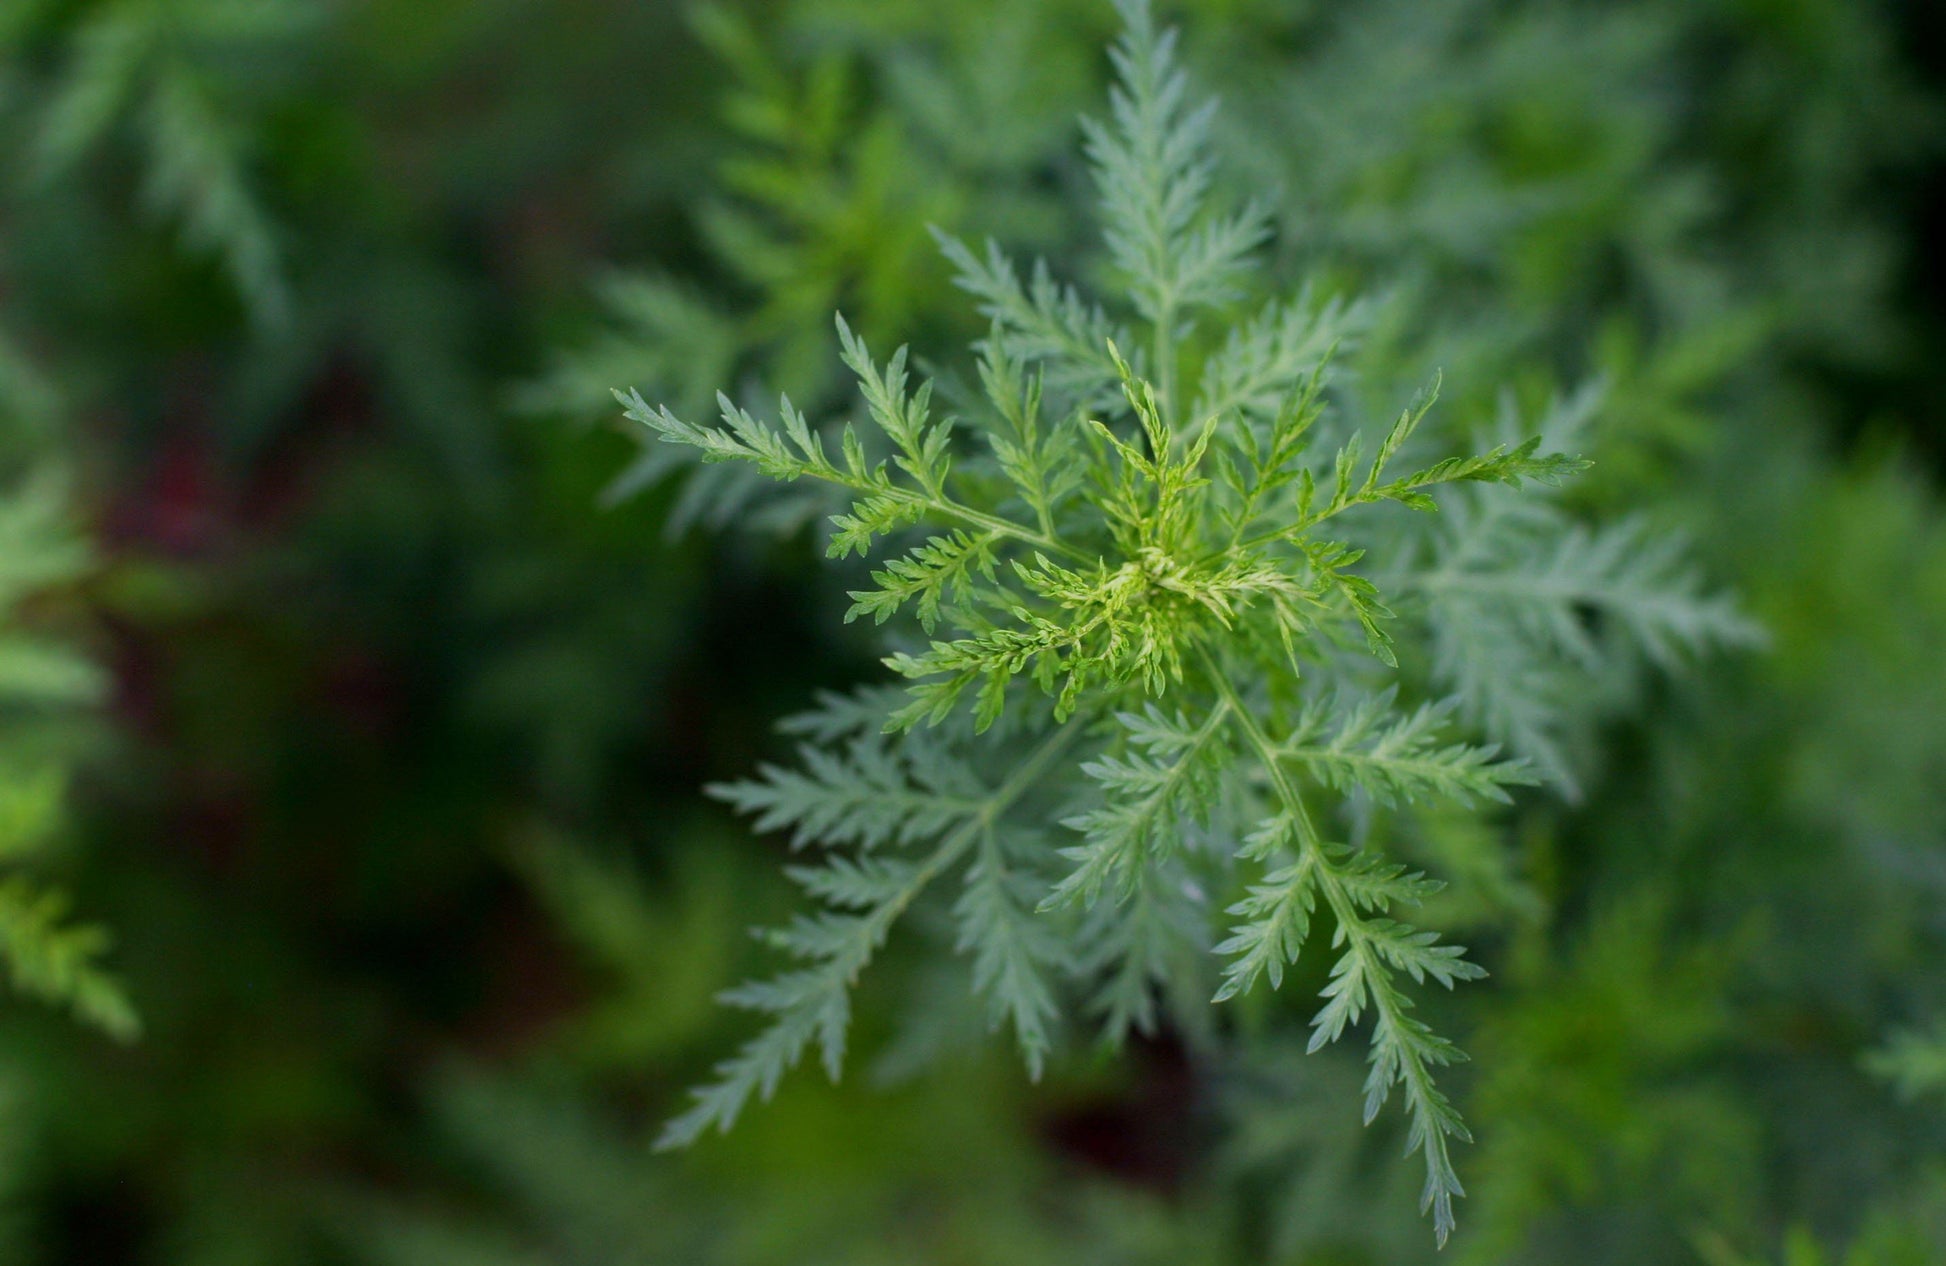 Artemisia annua (armoise annuelle) - extrait